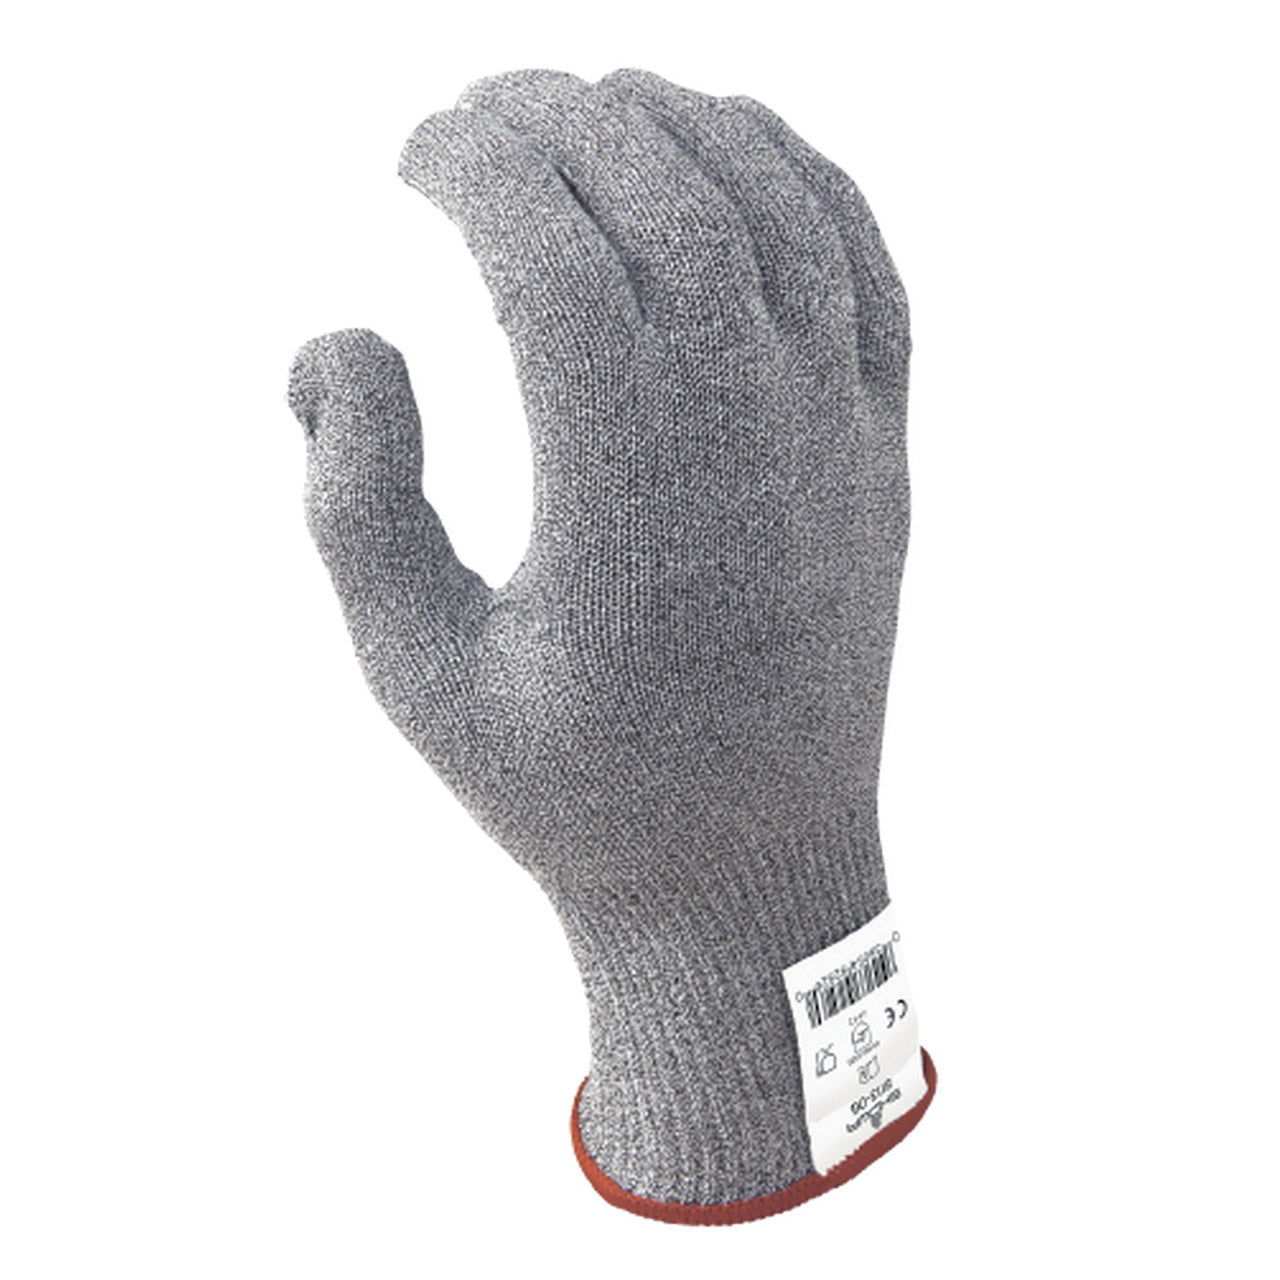 Dynamo Knit Glove, 13 Gauge, Level 4 ANSI cut-resistance